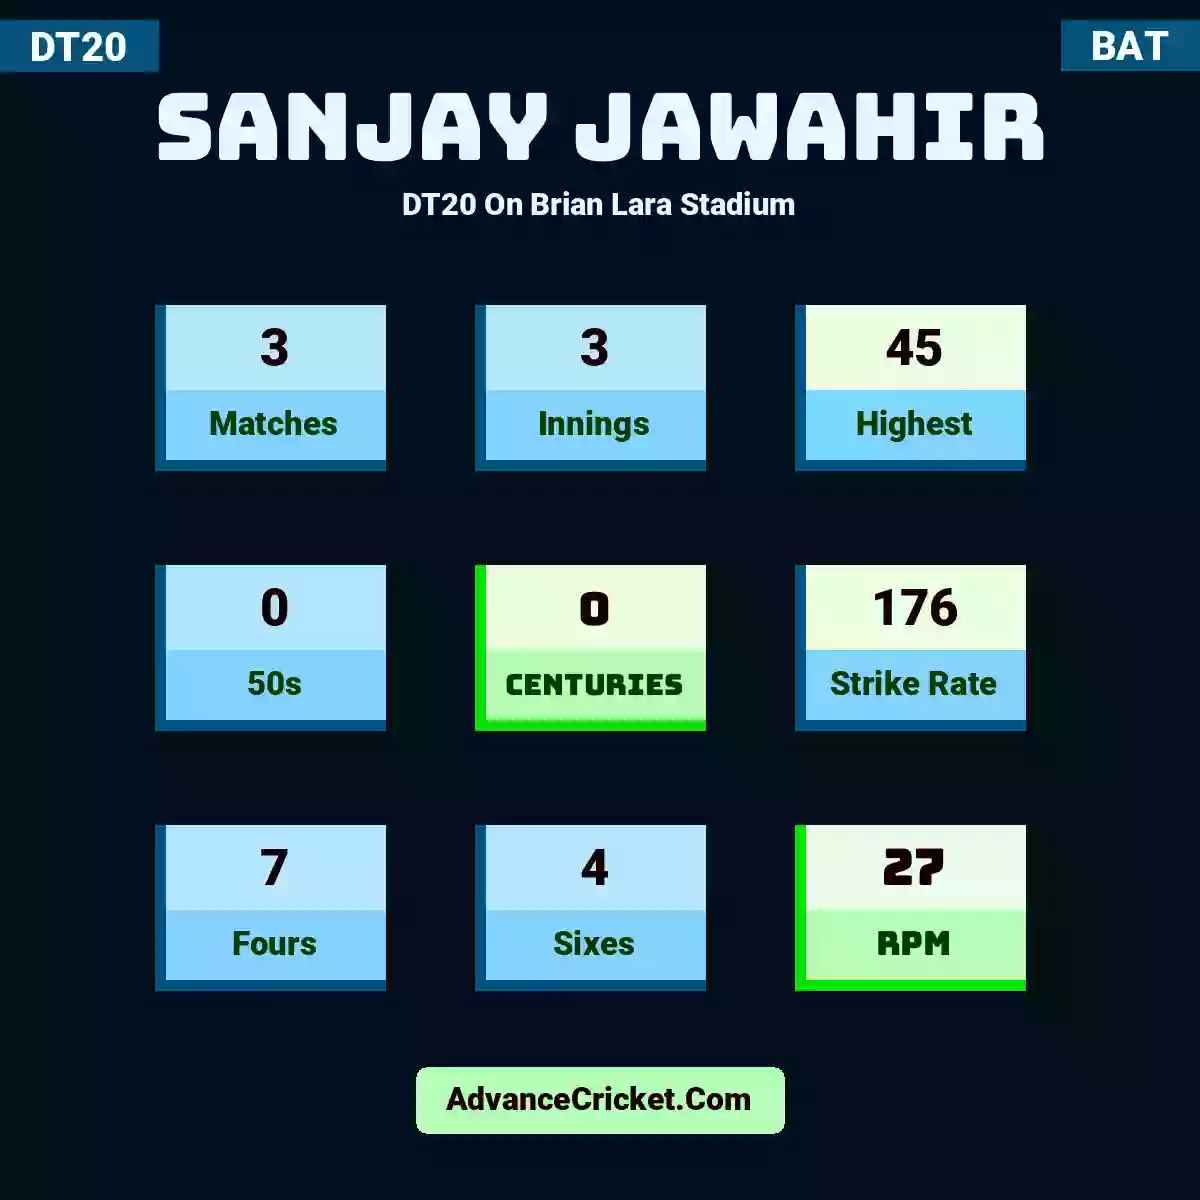 Sanjay Jawahir DT20  On Brian Lara Stadium, Sanjay Jawahir played 3 matches, scored 45 runs as highest, 0 half-centuries, and 0 centuries, with a strike rate of 176. S.Jawahir hit 7 fours and 4 sixes, with an RPM of 27.